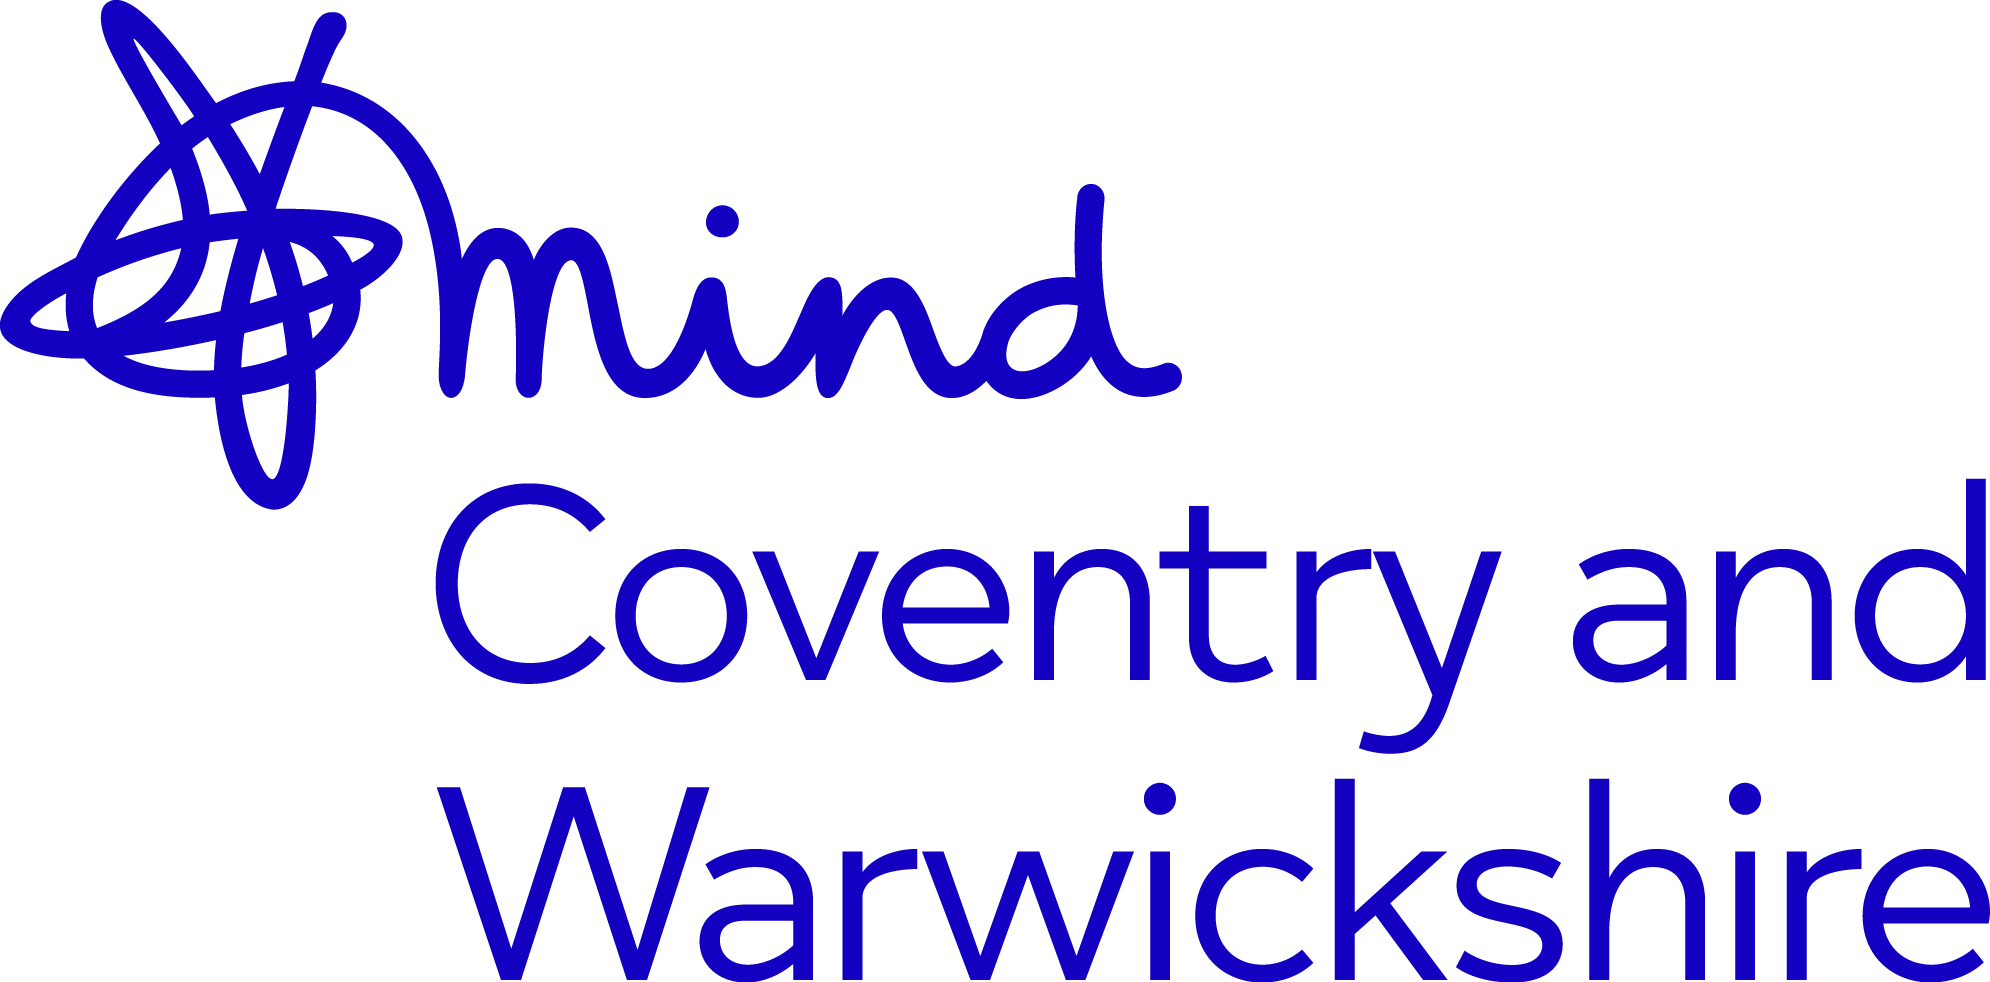 Coventry & Warwickshire Mind